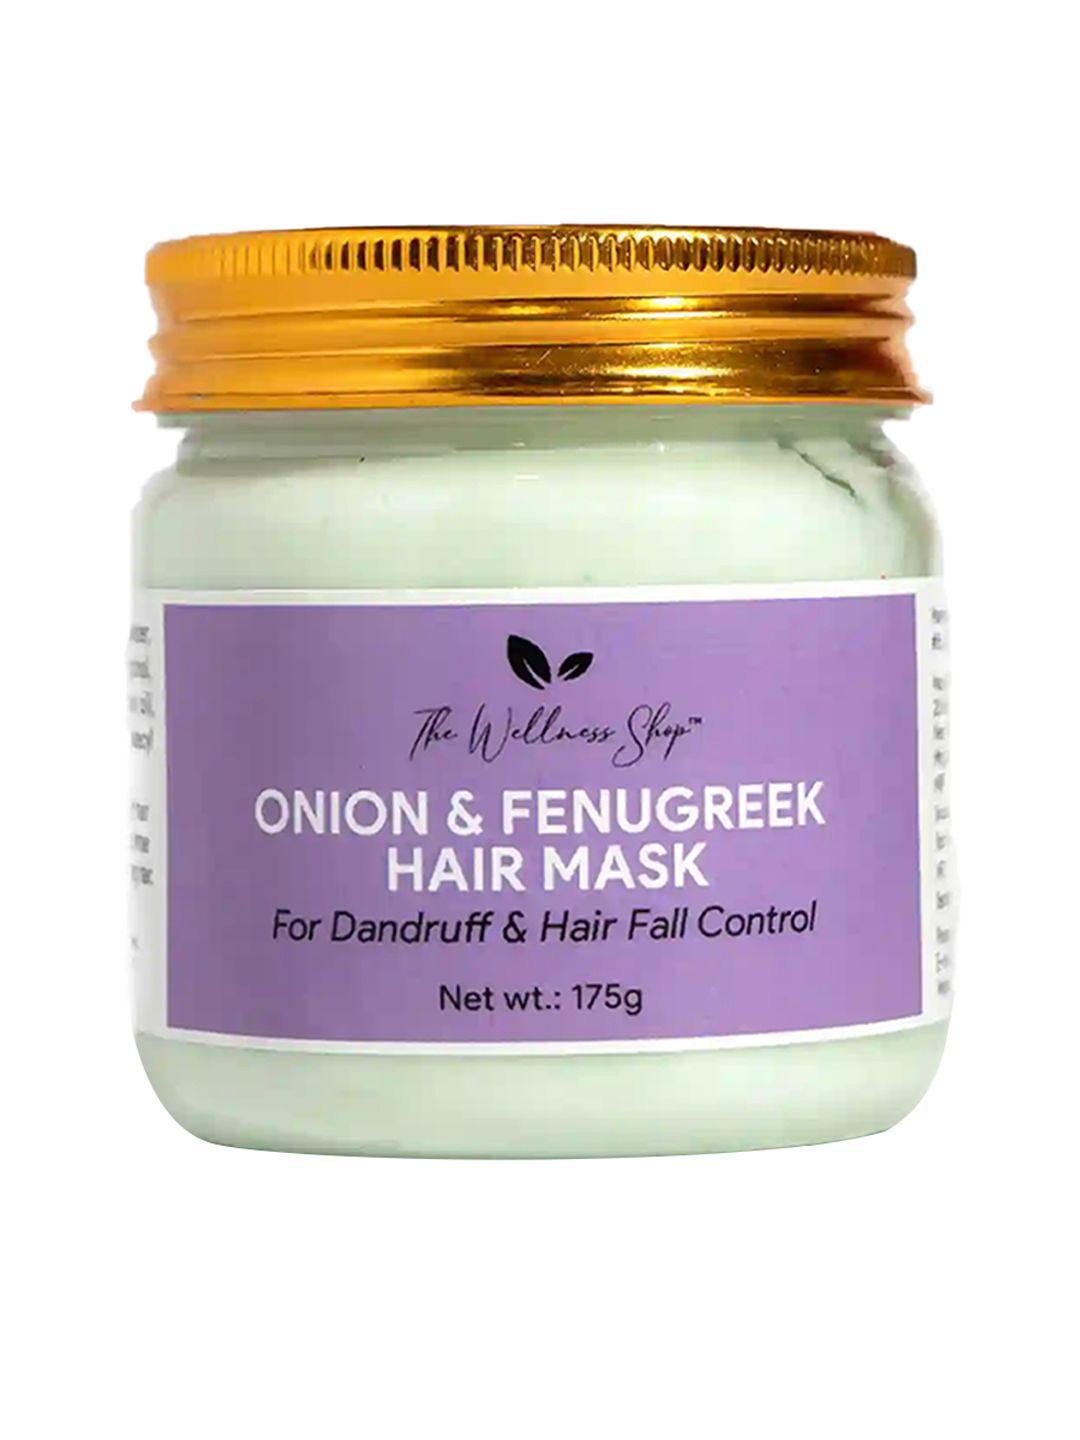 the wellness shop onion & fenugreek hair mask for dandruff & hair fall control - 175g